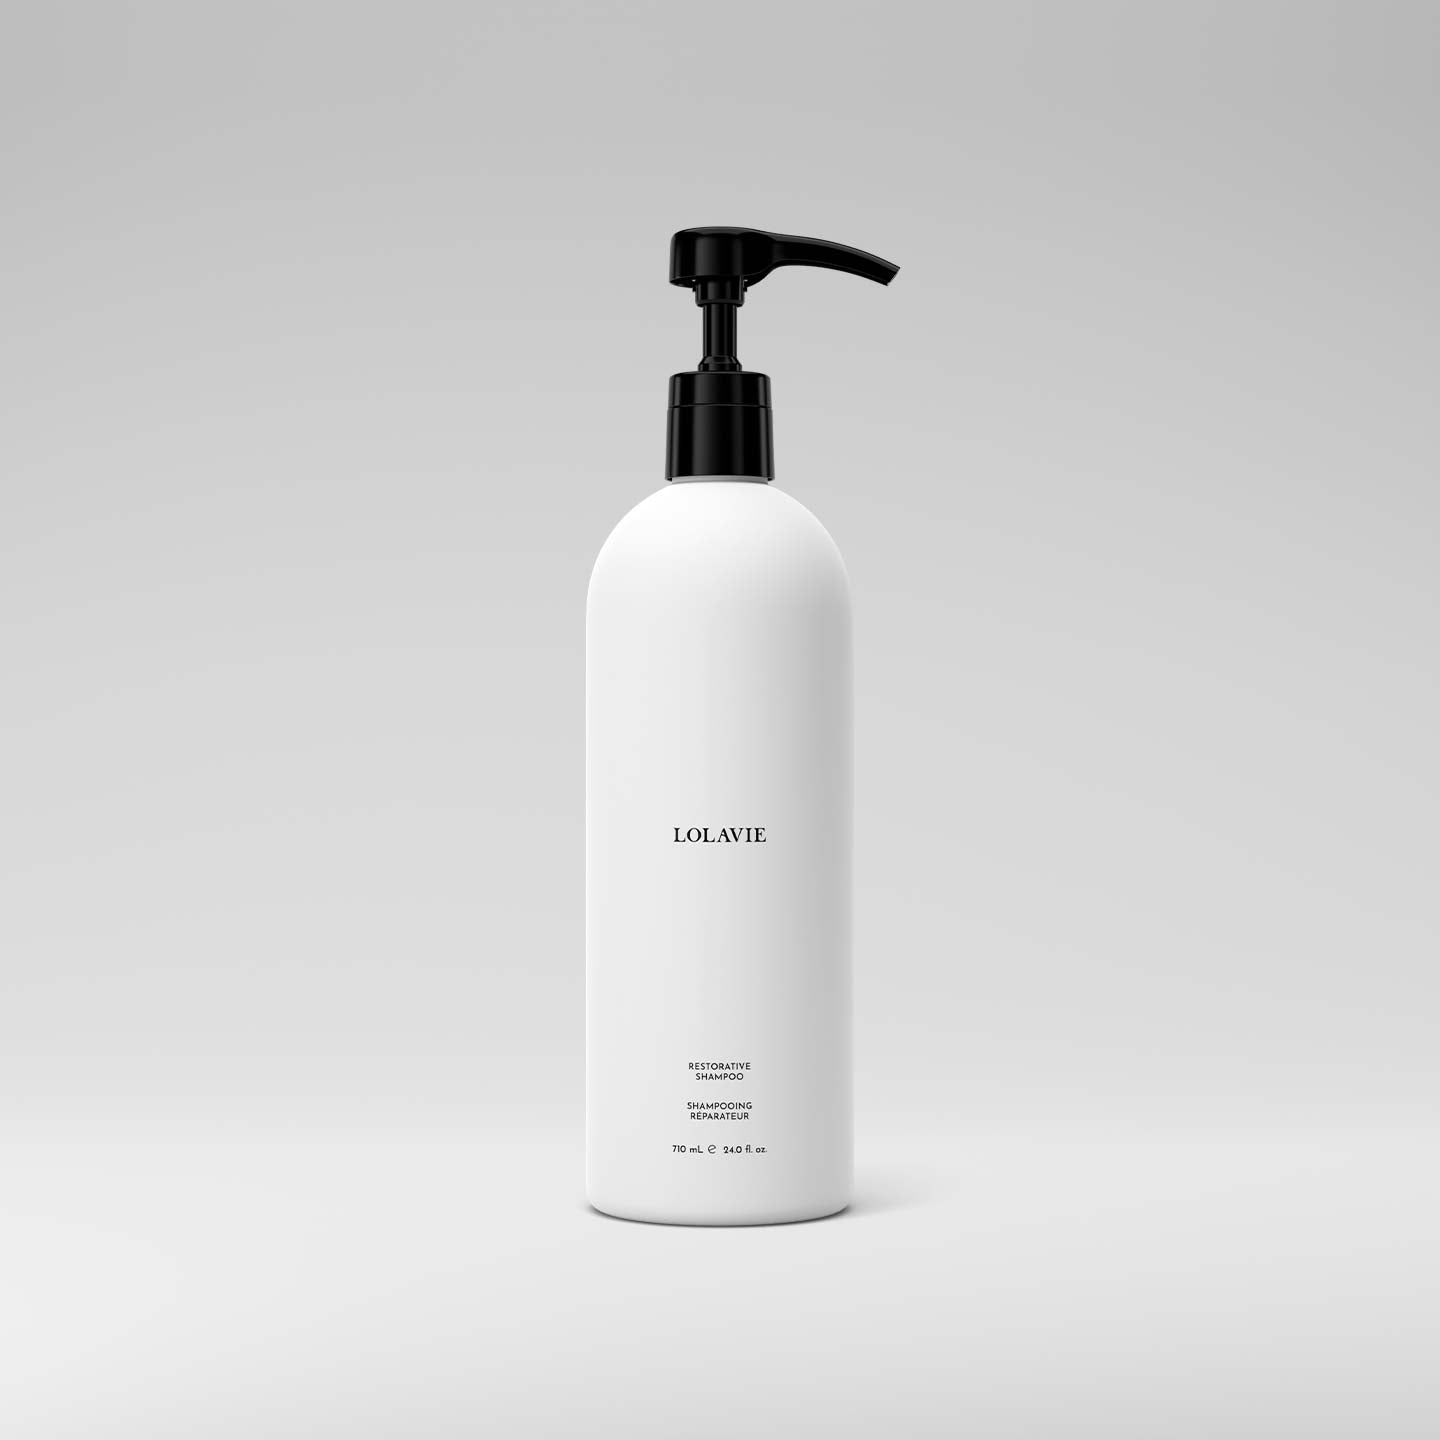 Shampoo bottles -  España